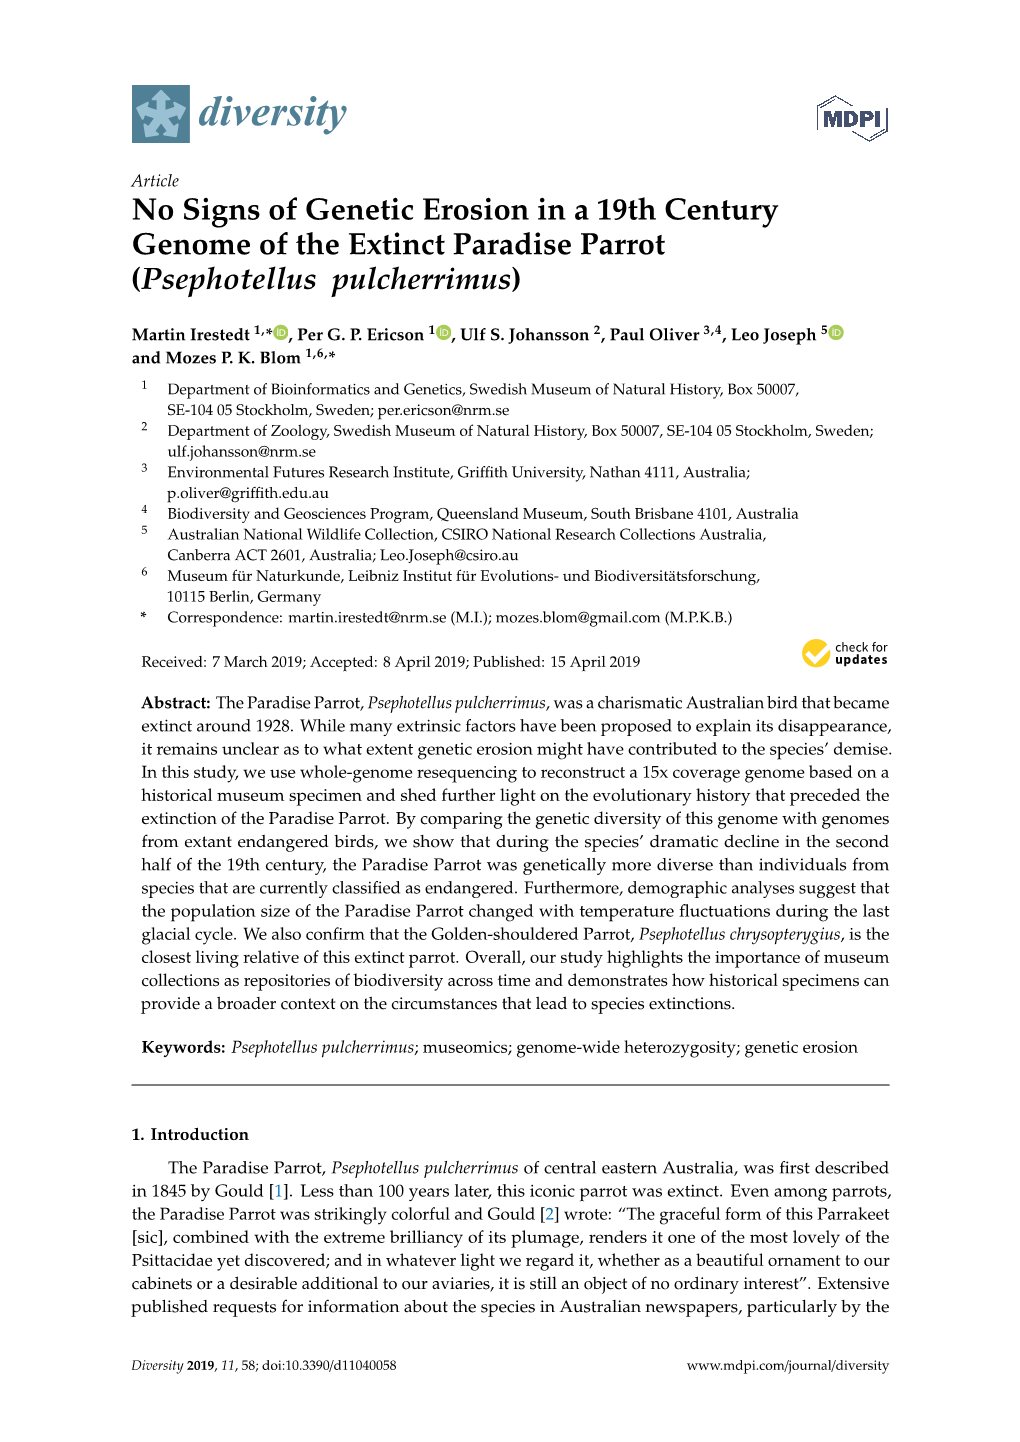 No Signs of Genetic Erosion in a 19Th Century Genome of the Extinct Paradise Parrot (Psephotellus Pulcherrimus)